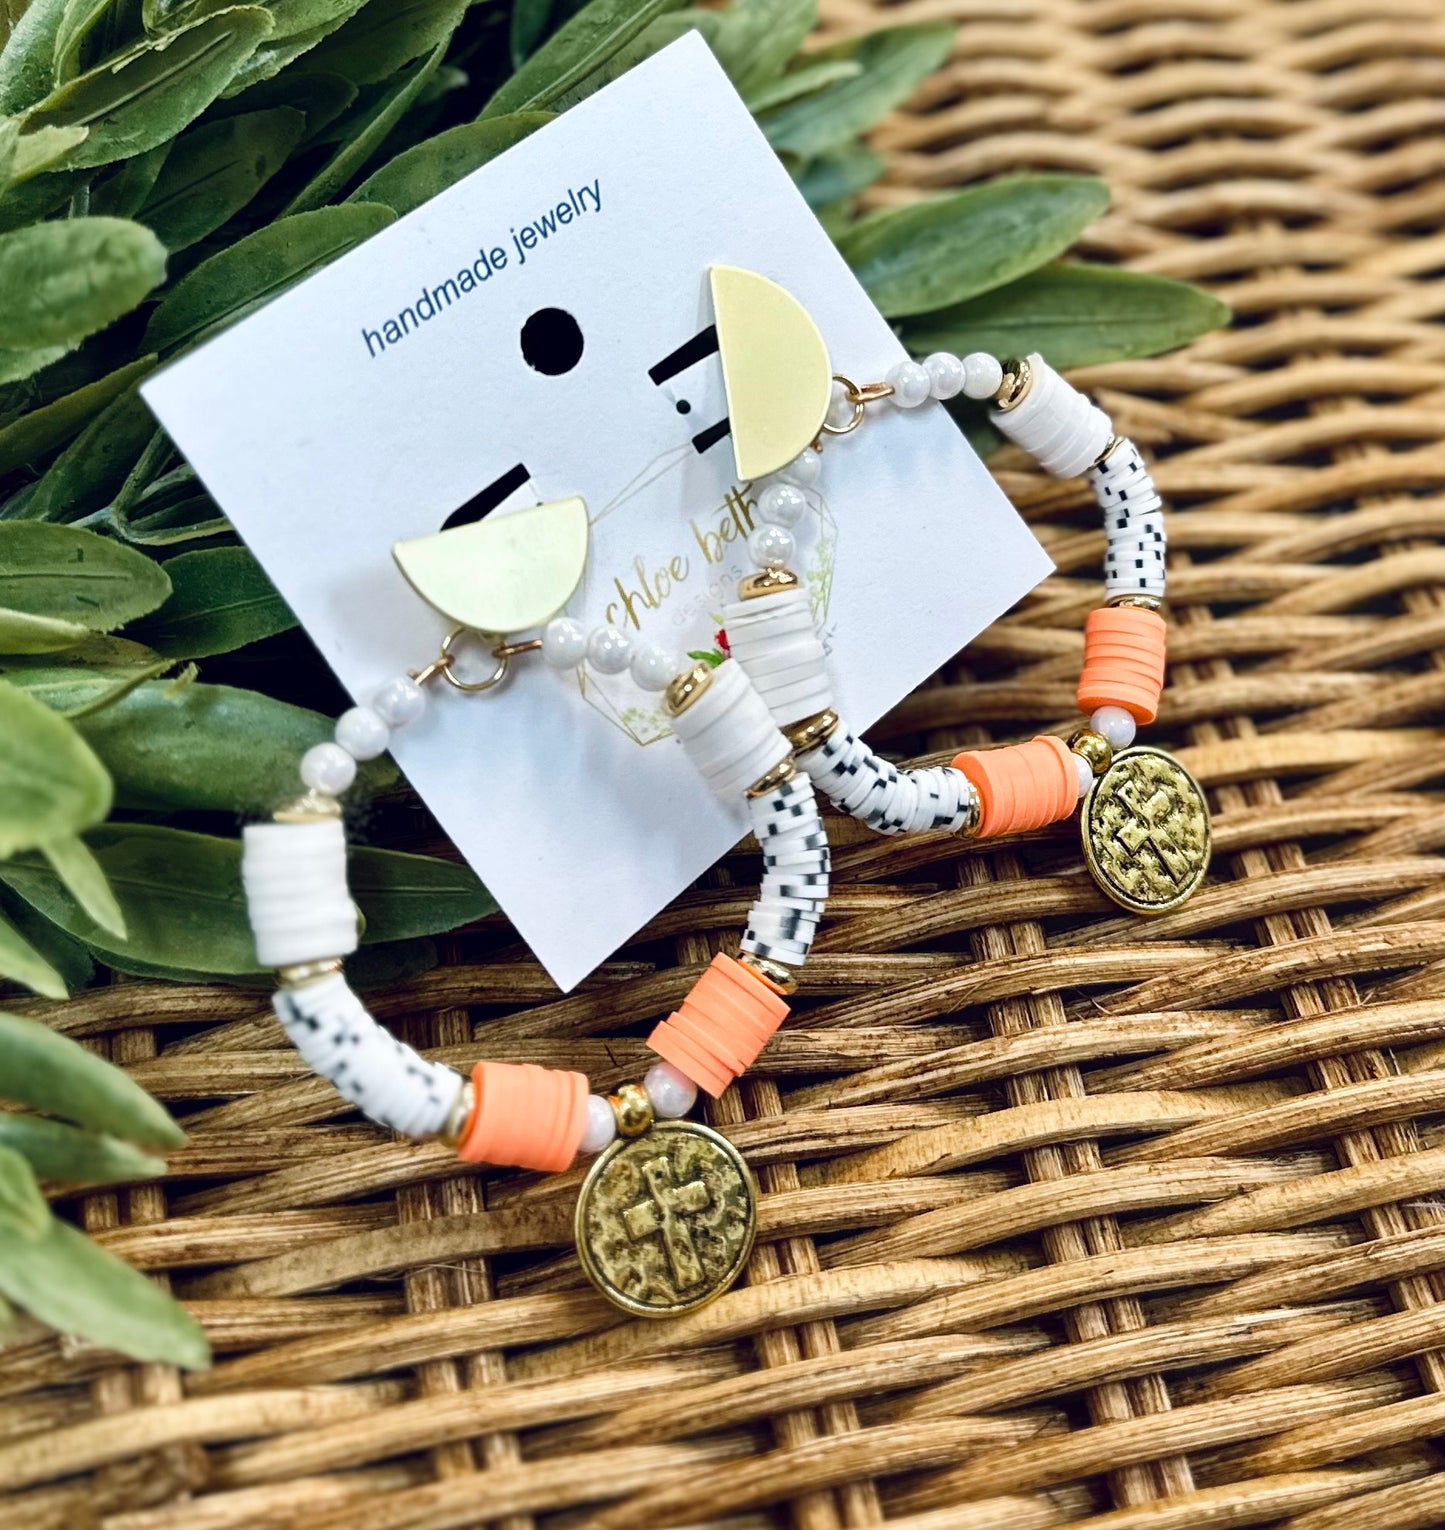 Chloe Beth Neon Orange with Dalmatian Dangle Earrings